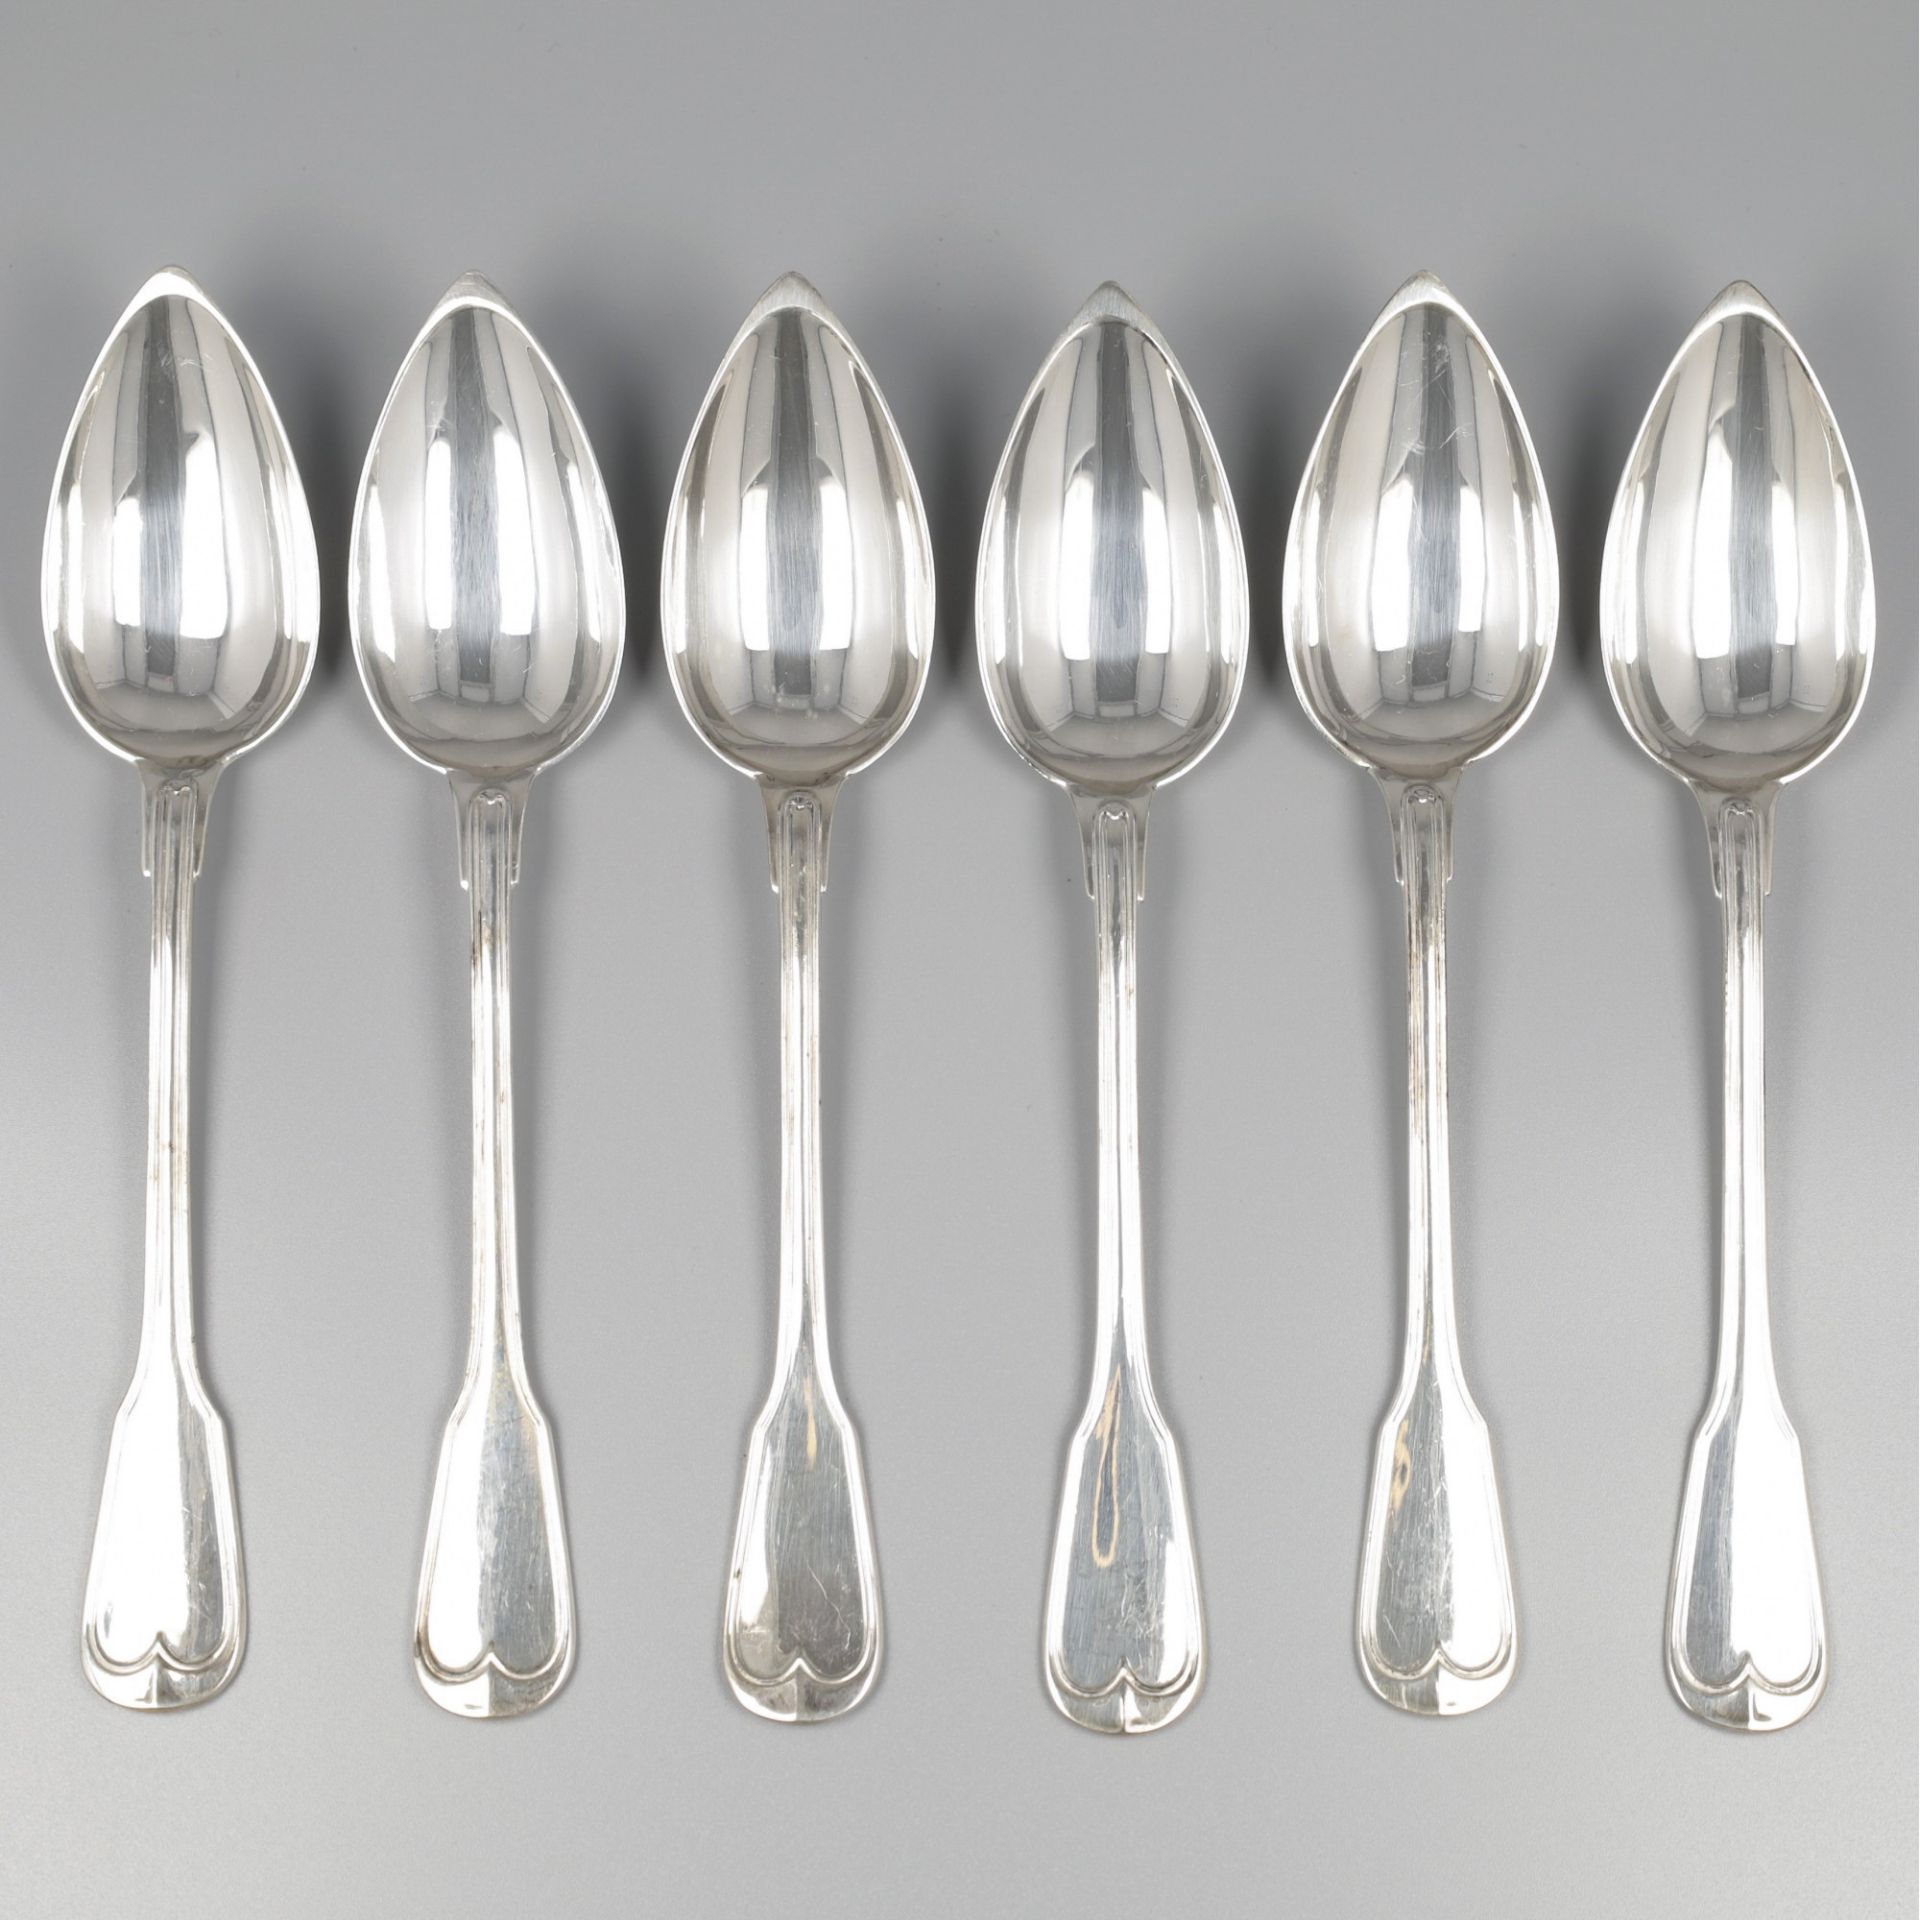 No reserve - 6-piece set breakfast spoons silver.
